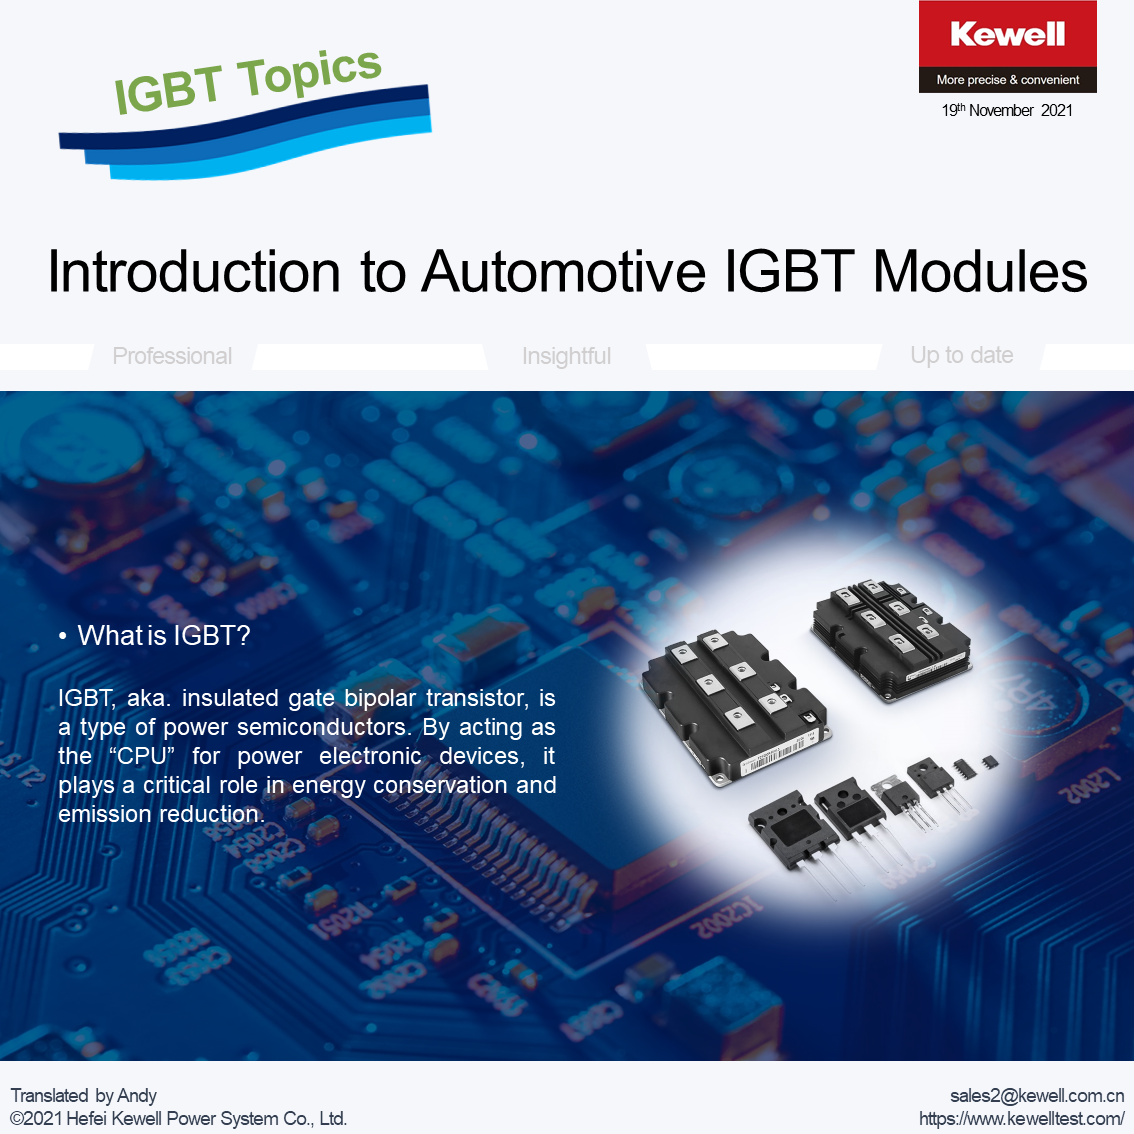 IGBT Topics: Introduction to Automotive IGBT Modules